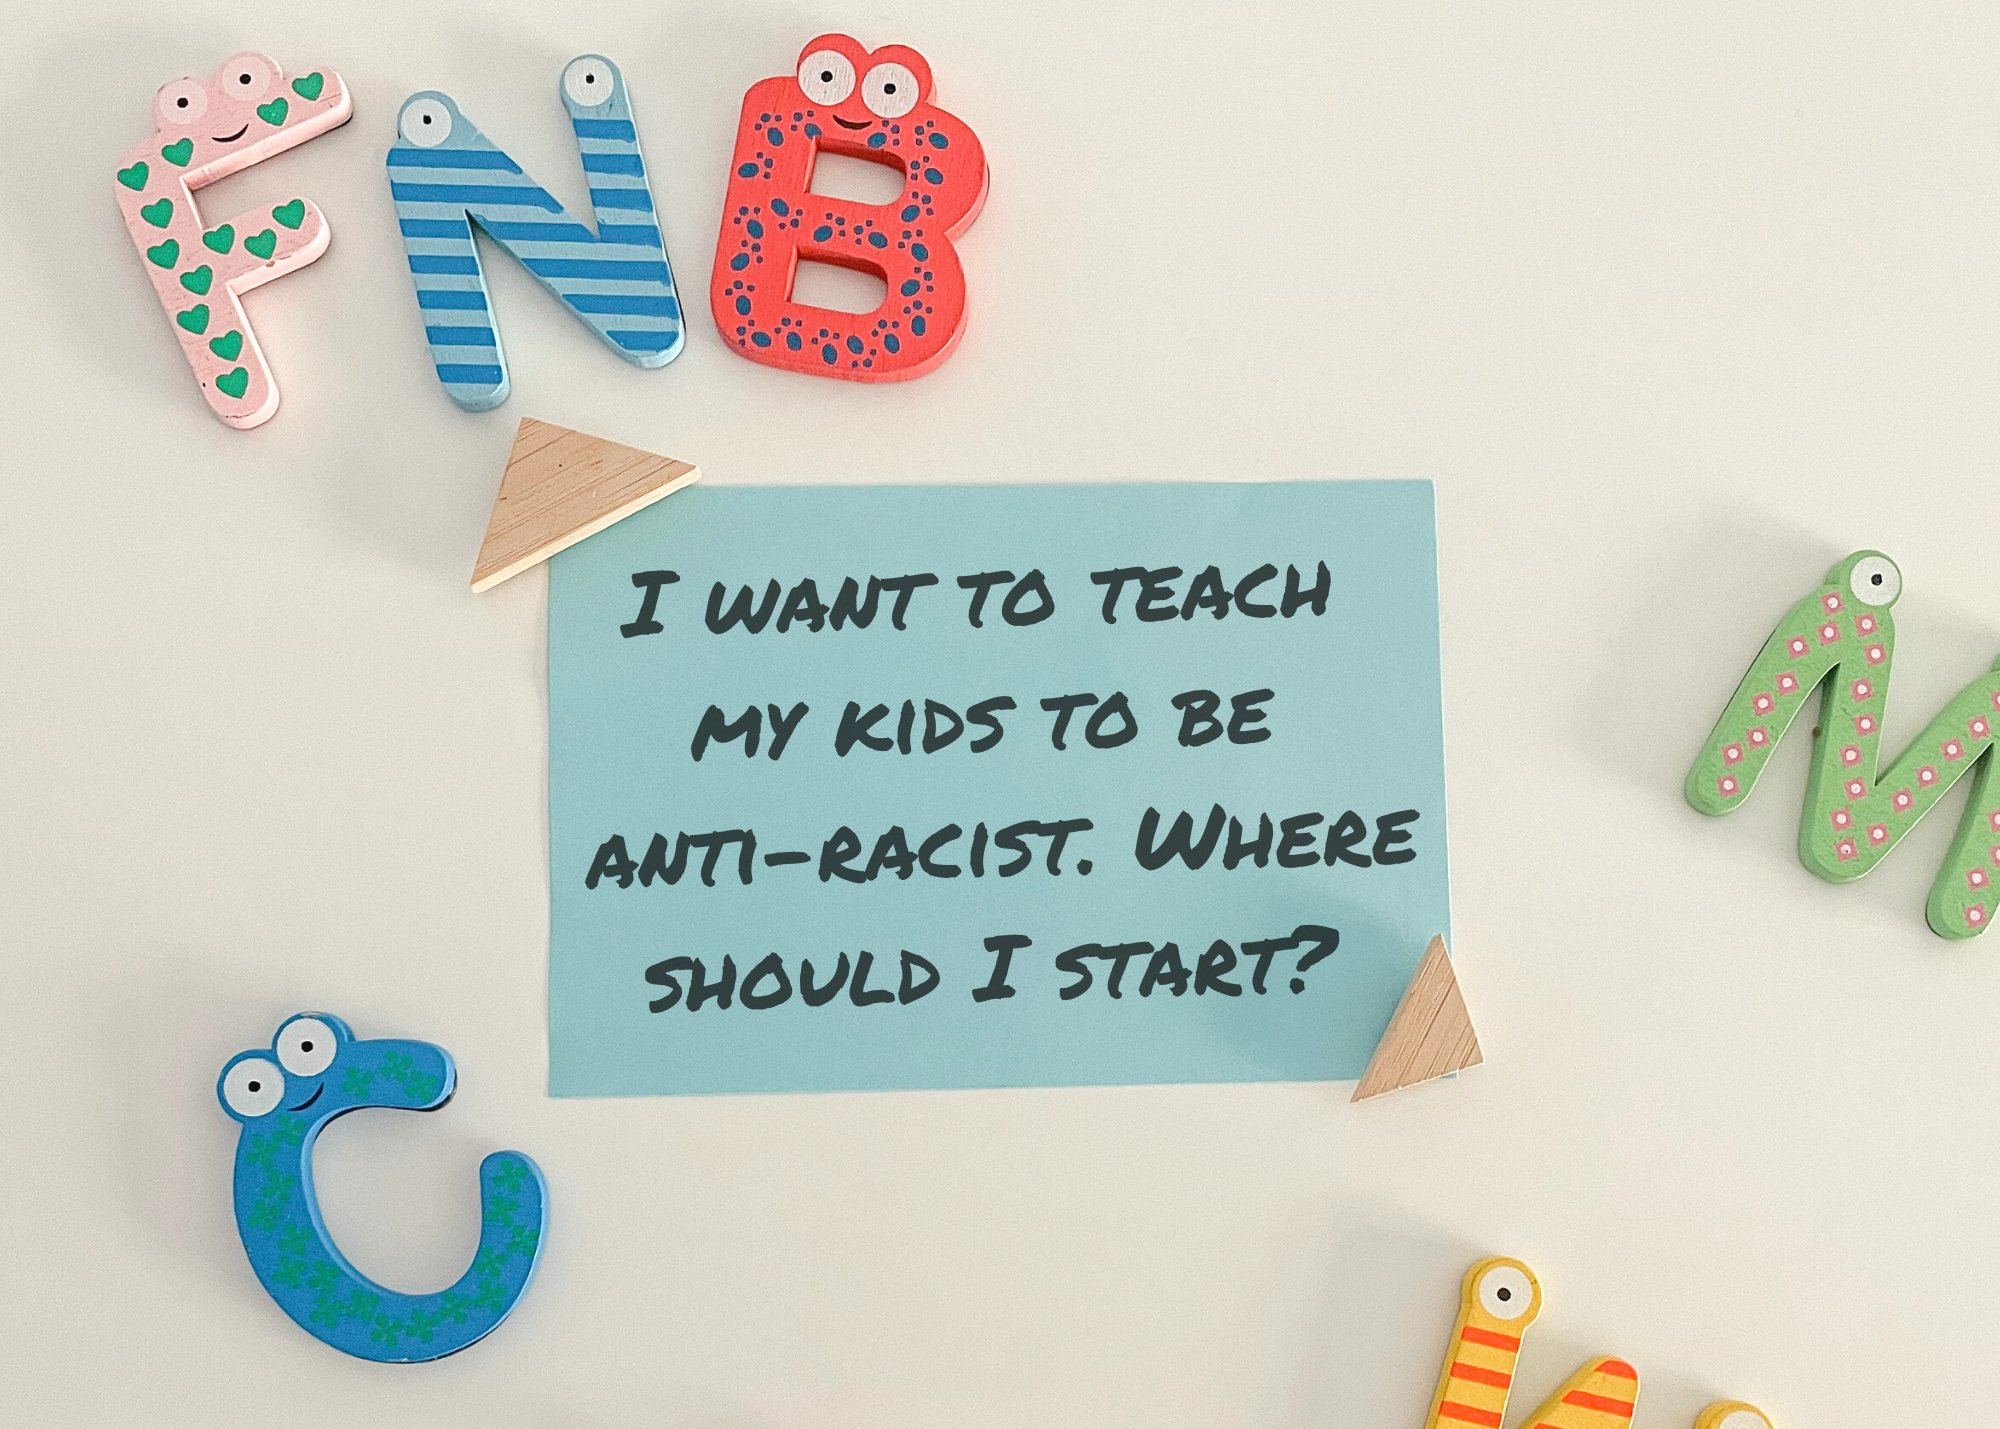 I Want to Teach My Kids to be Anti-Racist. Where Should I Start?